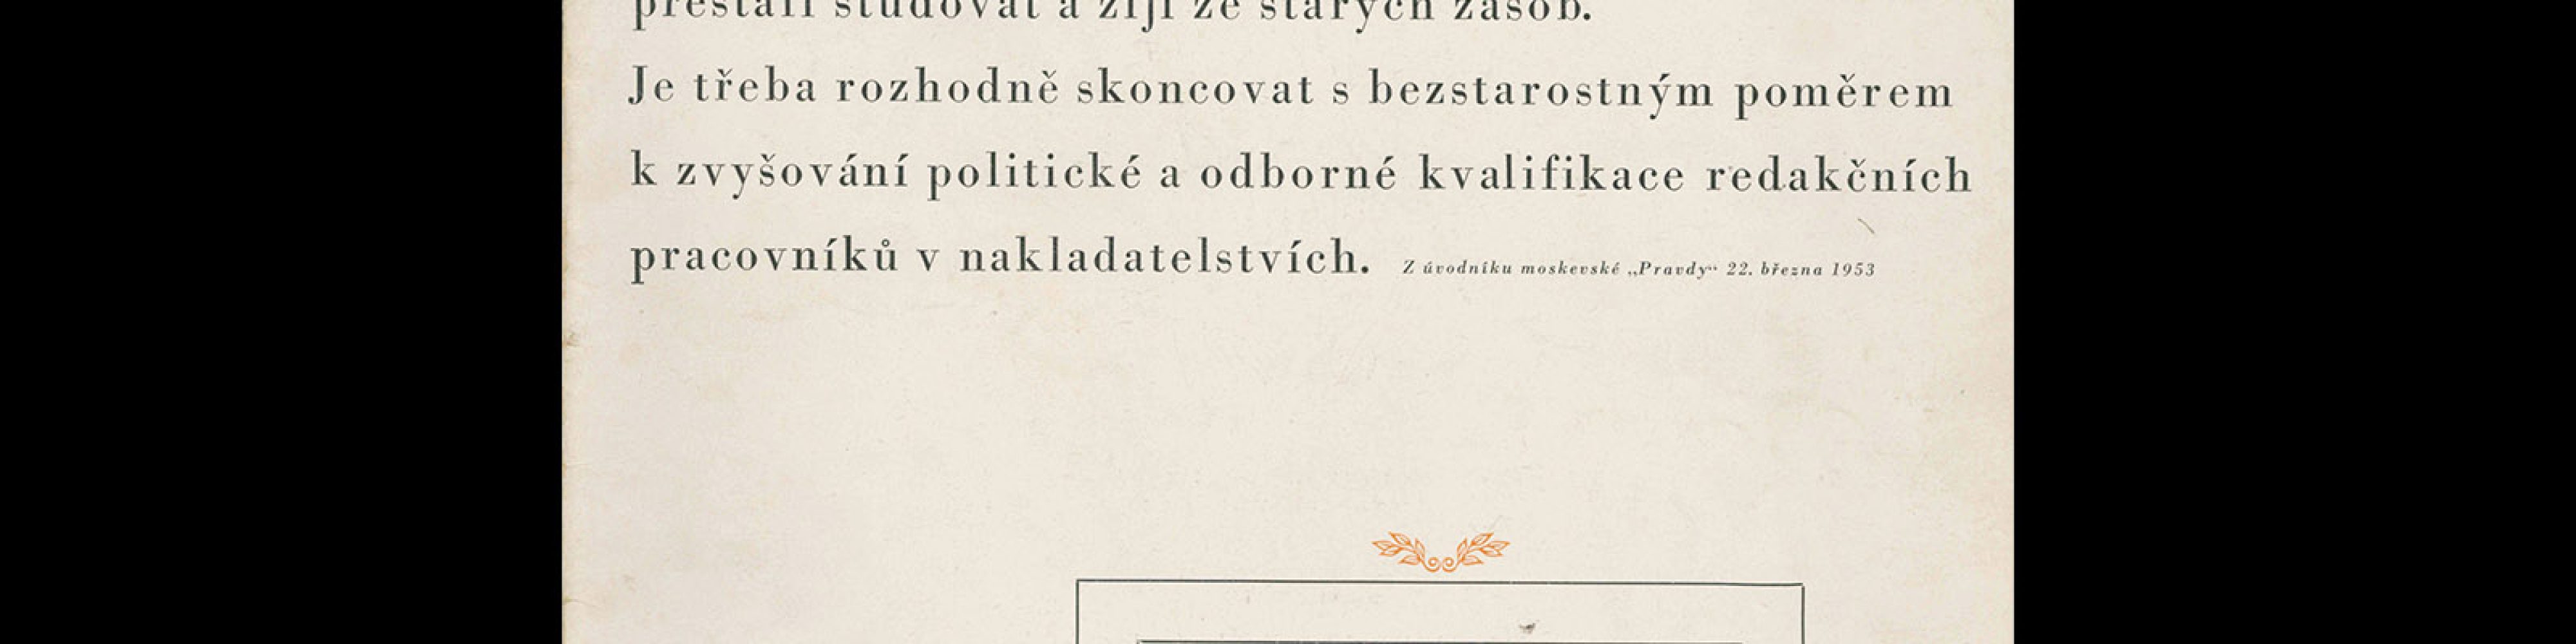 Typografia, ročník 56, 06, 1953. Cover design by Oldřich Hlavsa